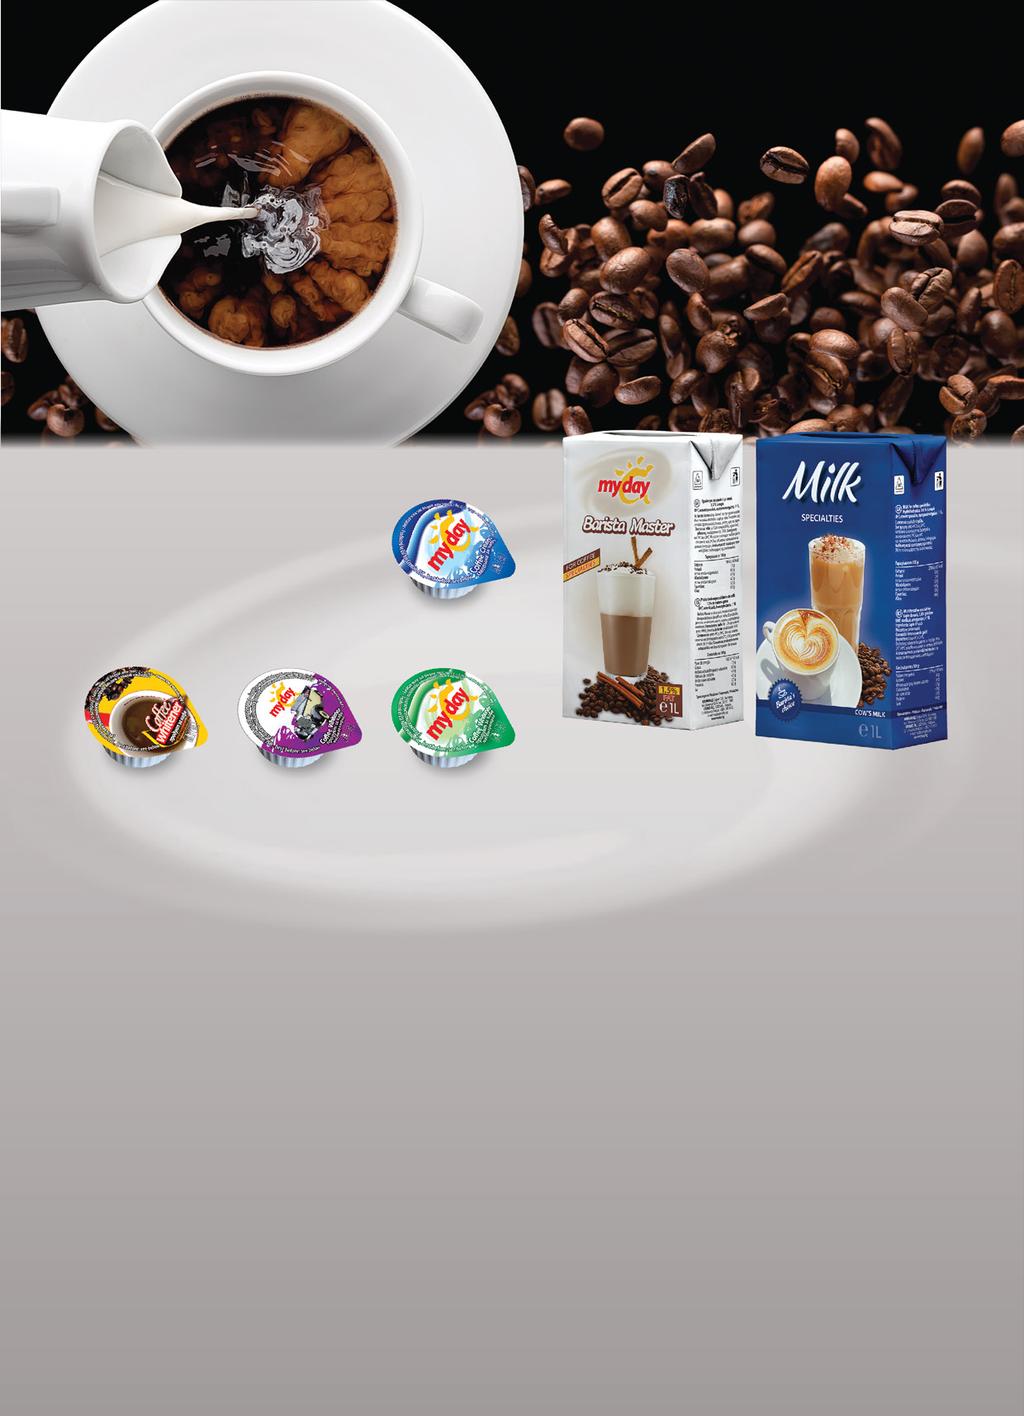 BG сметанка за кафе, млечна, 10% масленост GB coffee cream, dairy, 10% fat RO lapte pentru cafea, 10% grăsime GR kρέμα γαλακτος για καφέ, 10% λιπαρά 10 x 7. 5 g Barista Master 1.5% Milk Specialties 3.